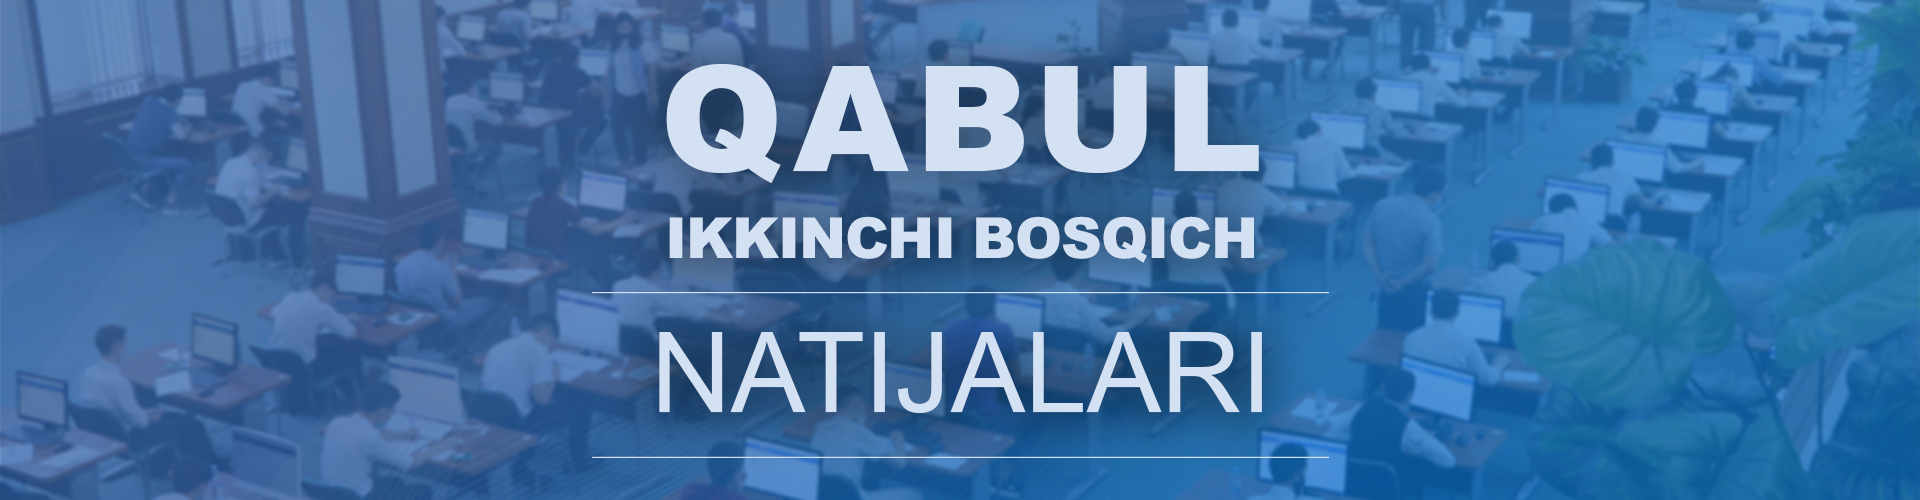 You are currently viewing Qabul natijalari 2-bosqich